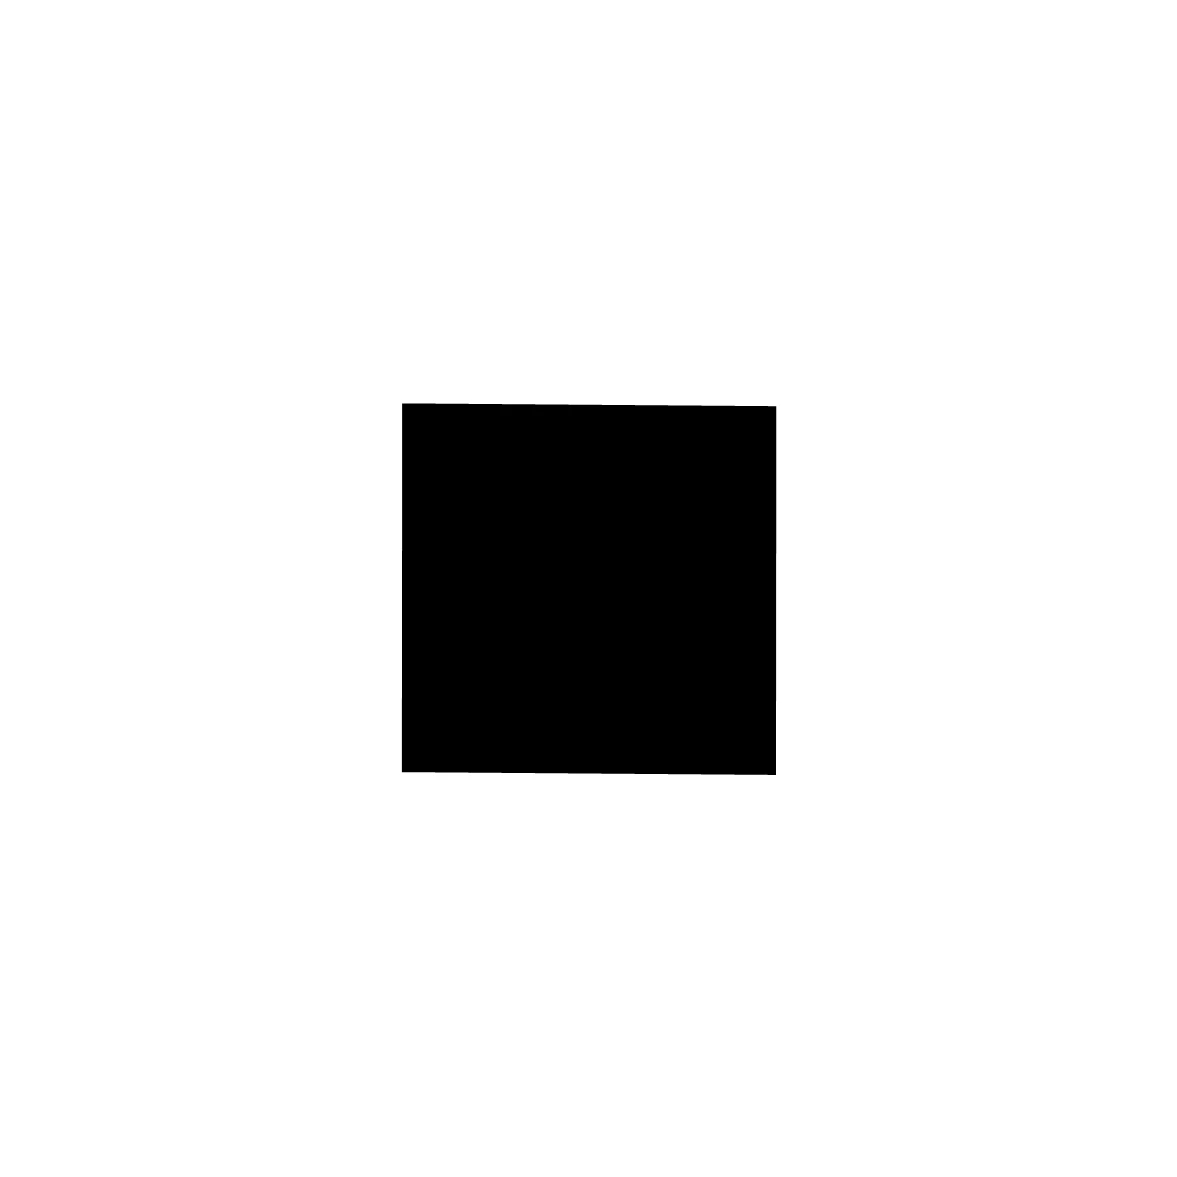 Moosgummidichtung vierkant | 10 mm Höhe | Farbe: schwarz